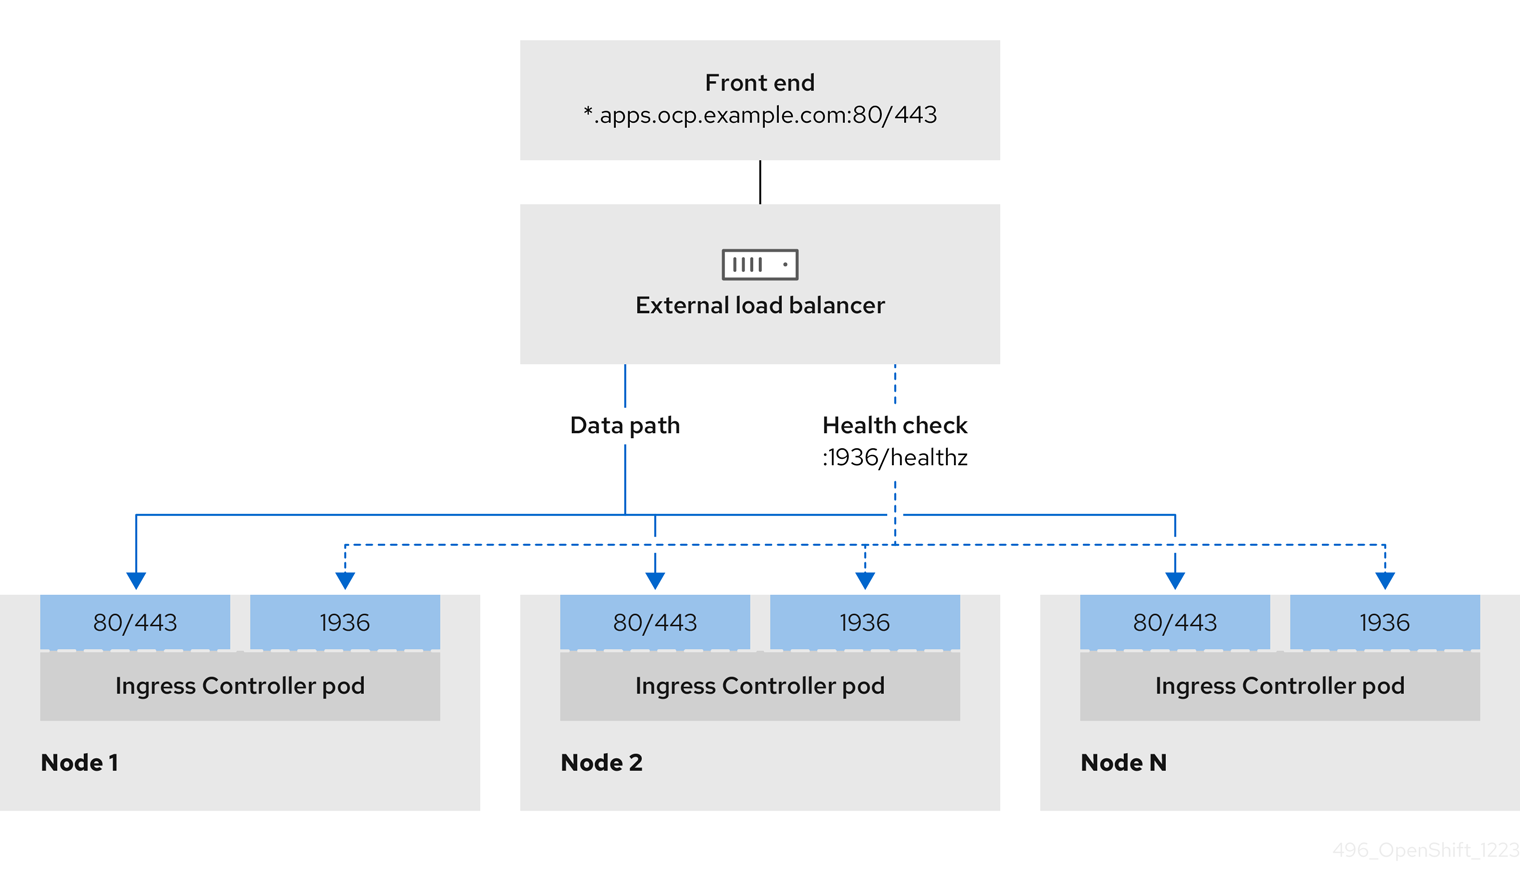 OpenShift Container Platform 環境で動作する Ingress Controller のネットワークワークフローの例を示すイメージ。